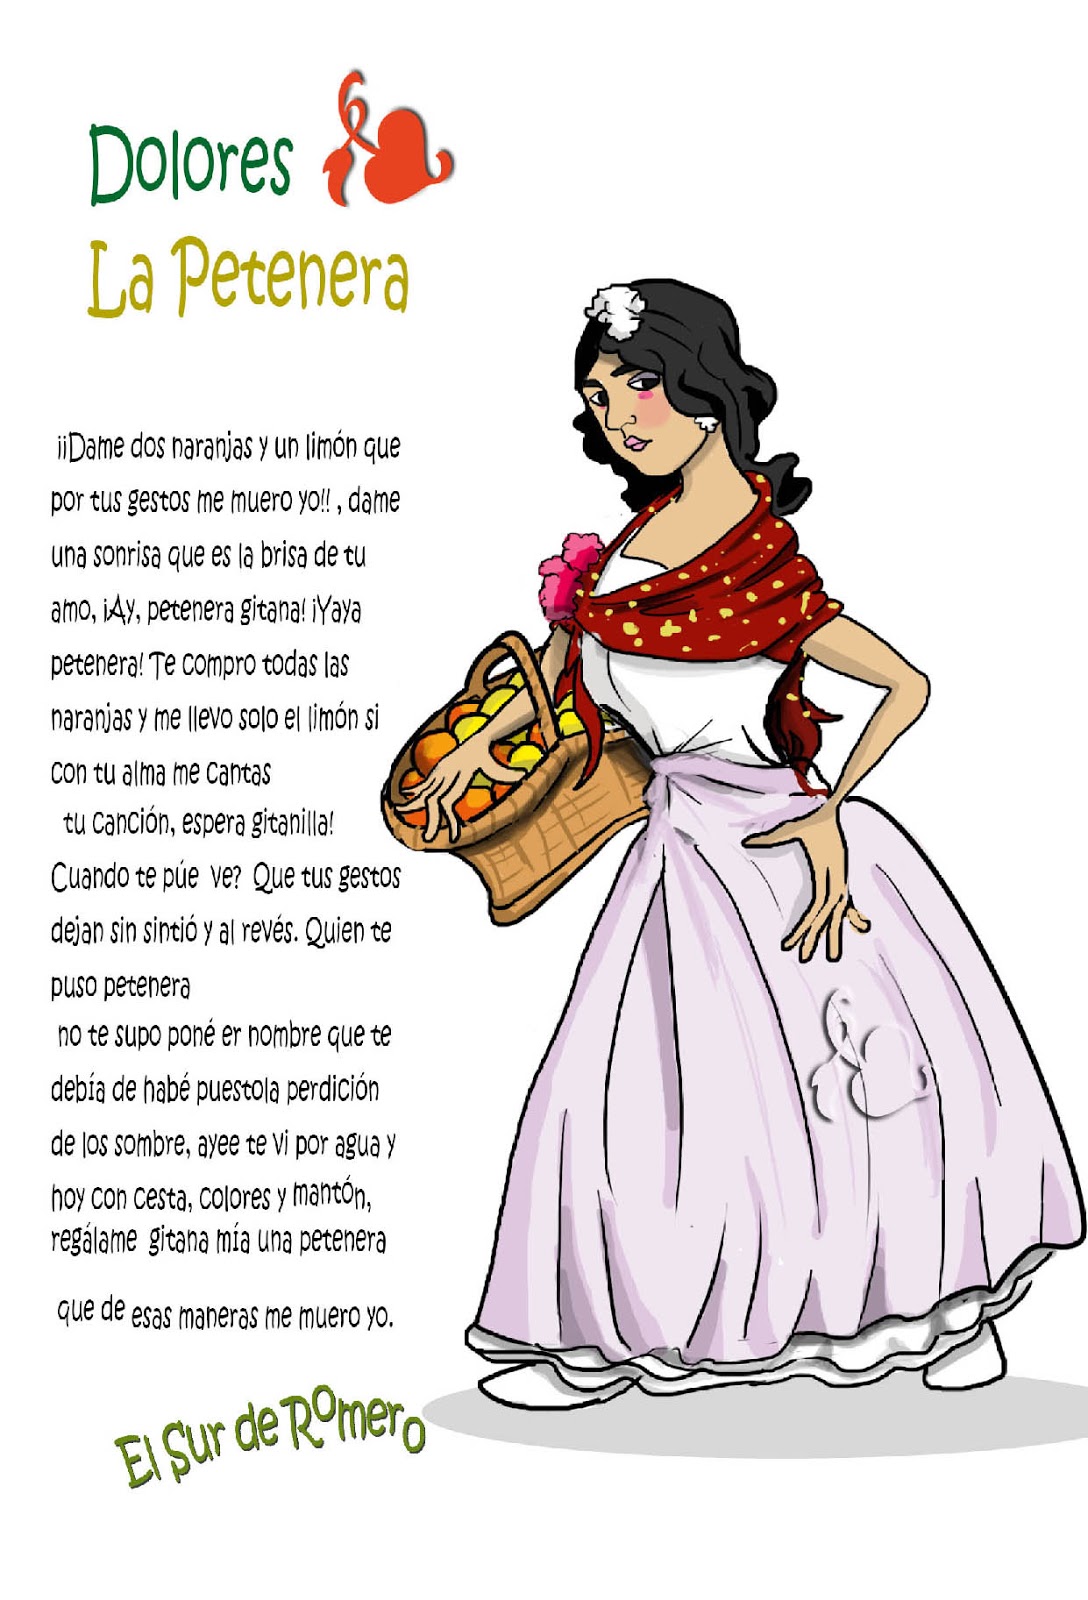 <img src="Dolores la Petenera 2.jpg" alt="Cantaora de Peteneras en dibujo"/>